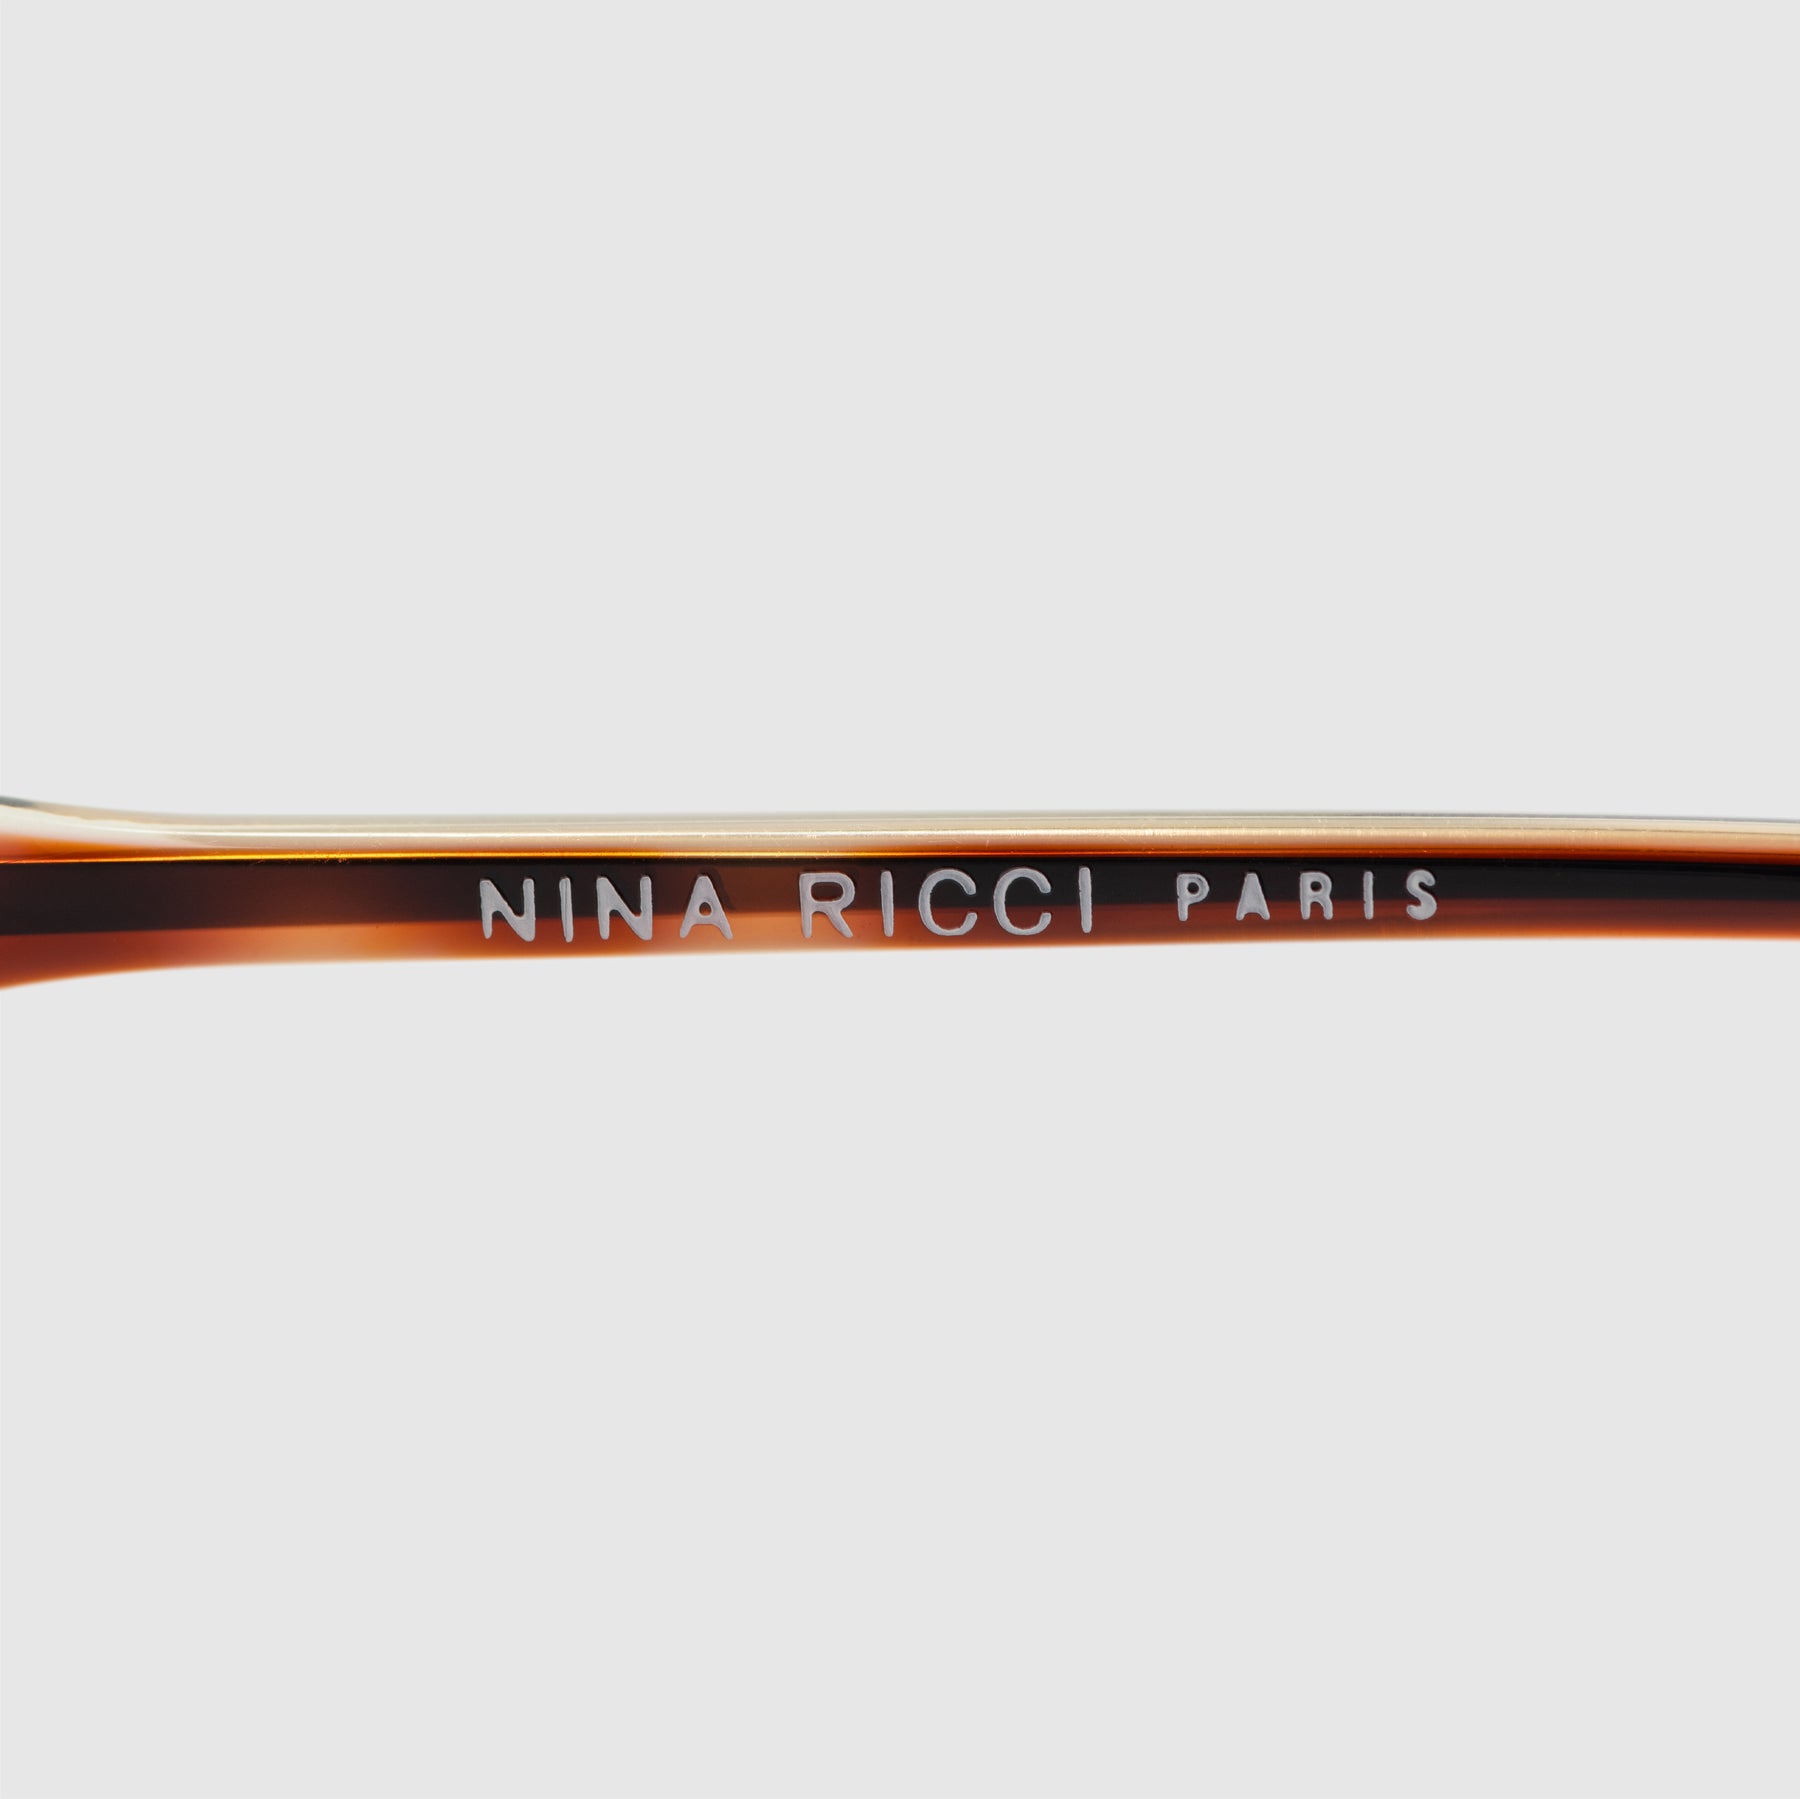 Vintage Nina Ricci Sunglasses circa 1970's